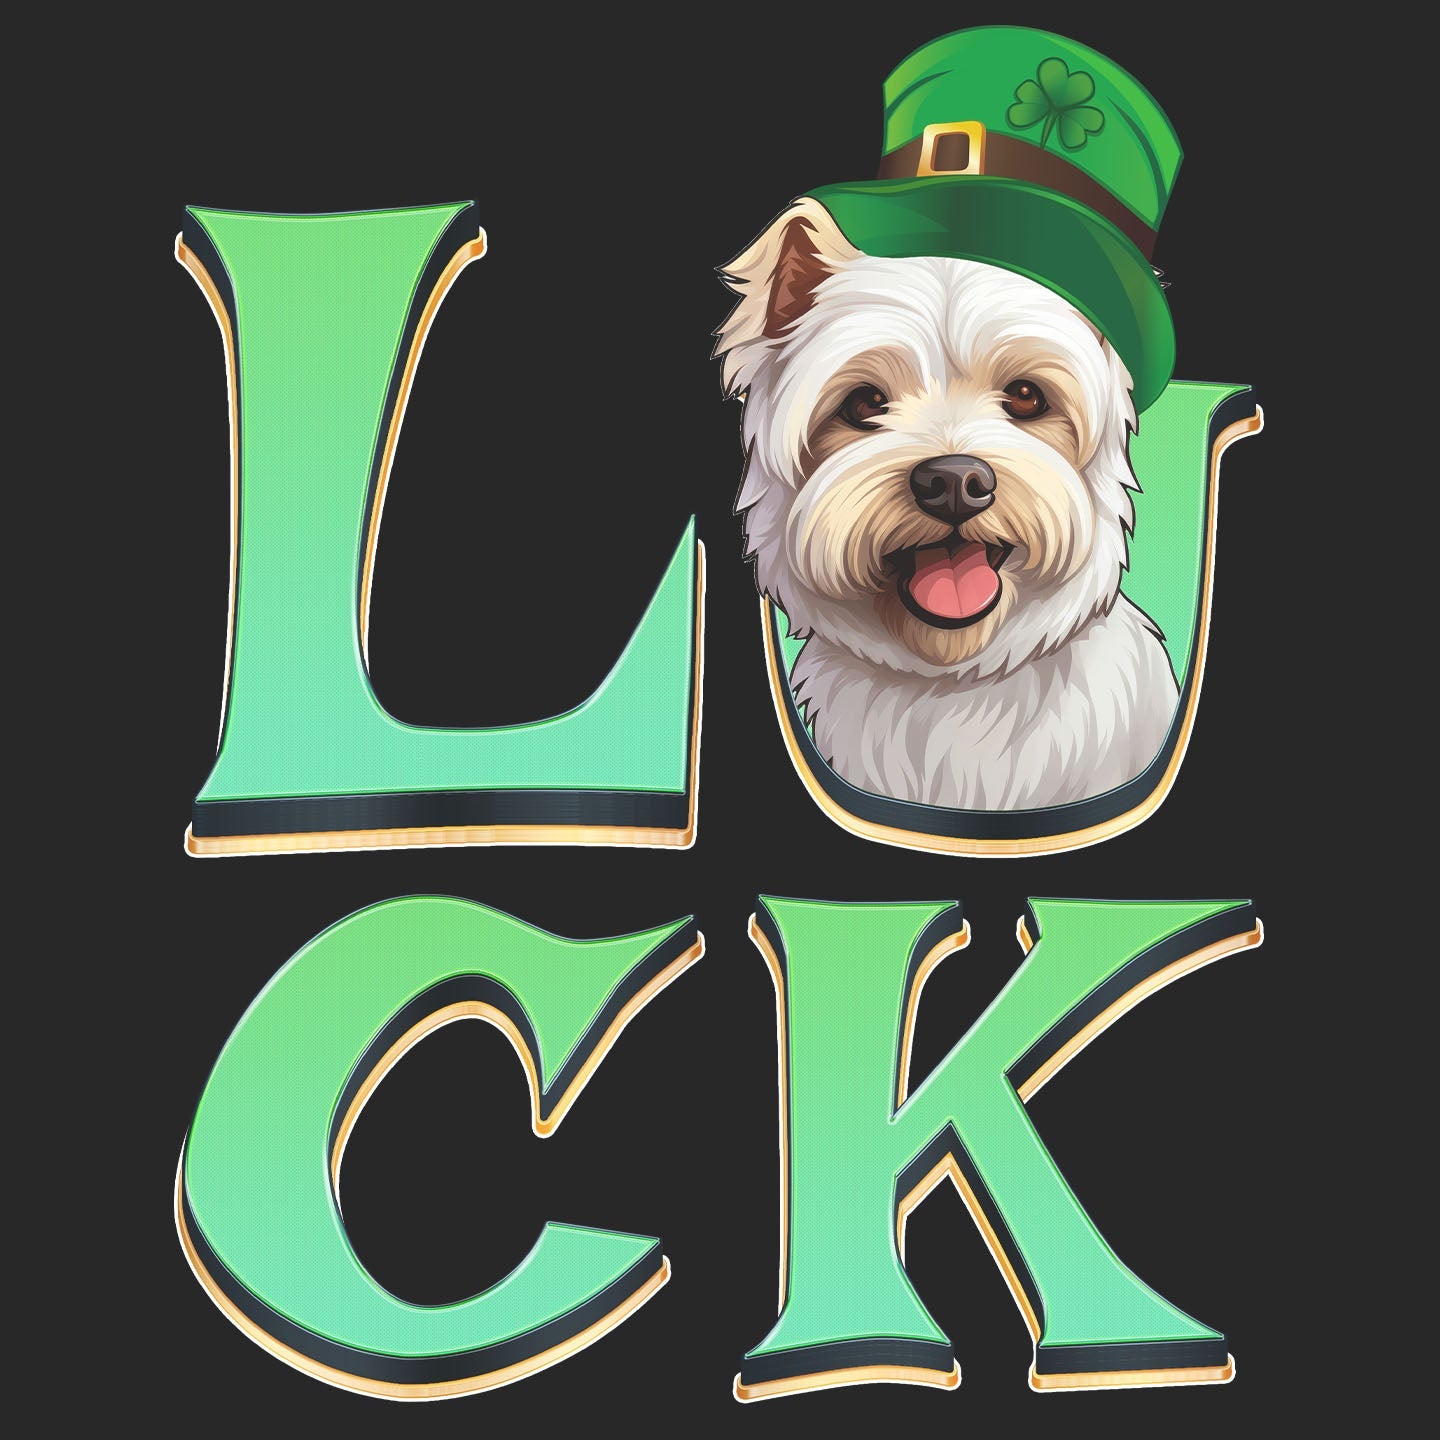 Big LUCK St. Patrick's Day West Highland White Terrier - Adult Unisex Crewneck Sweatshirt